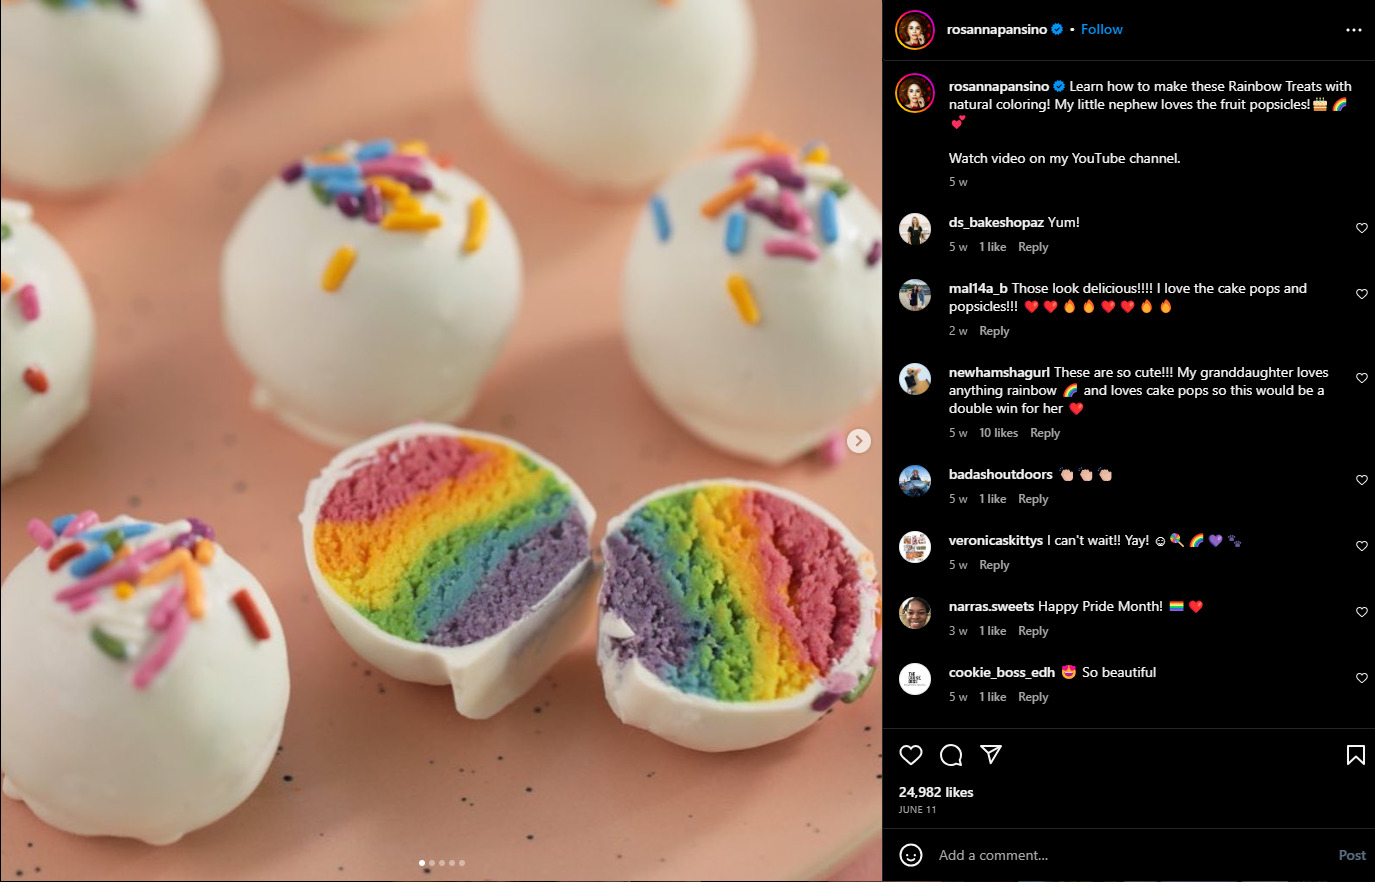 food influencers on Instagram: Rosanna Pansino